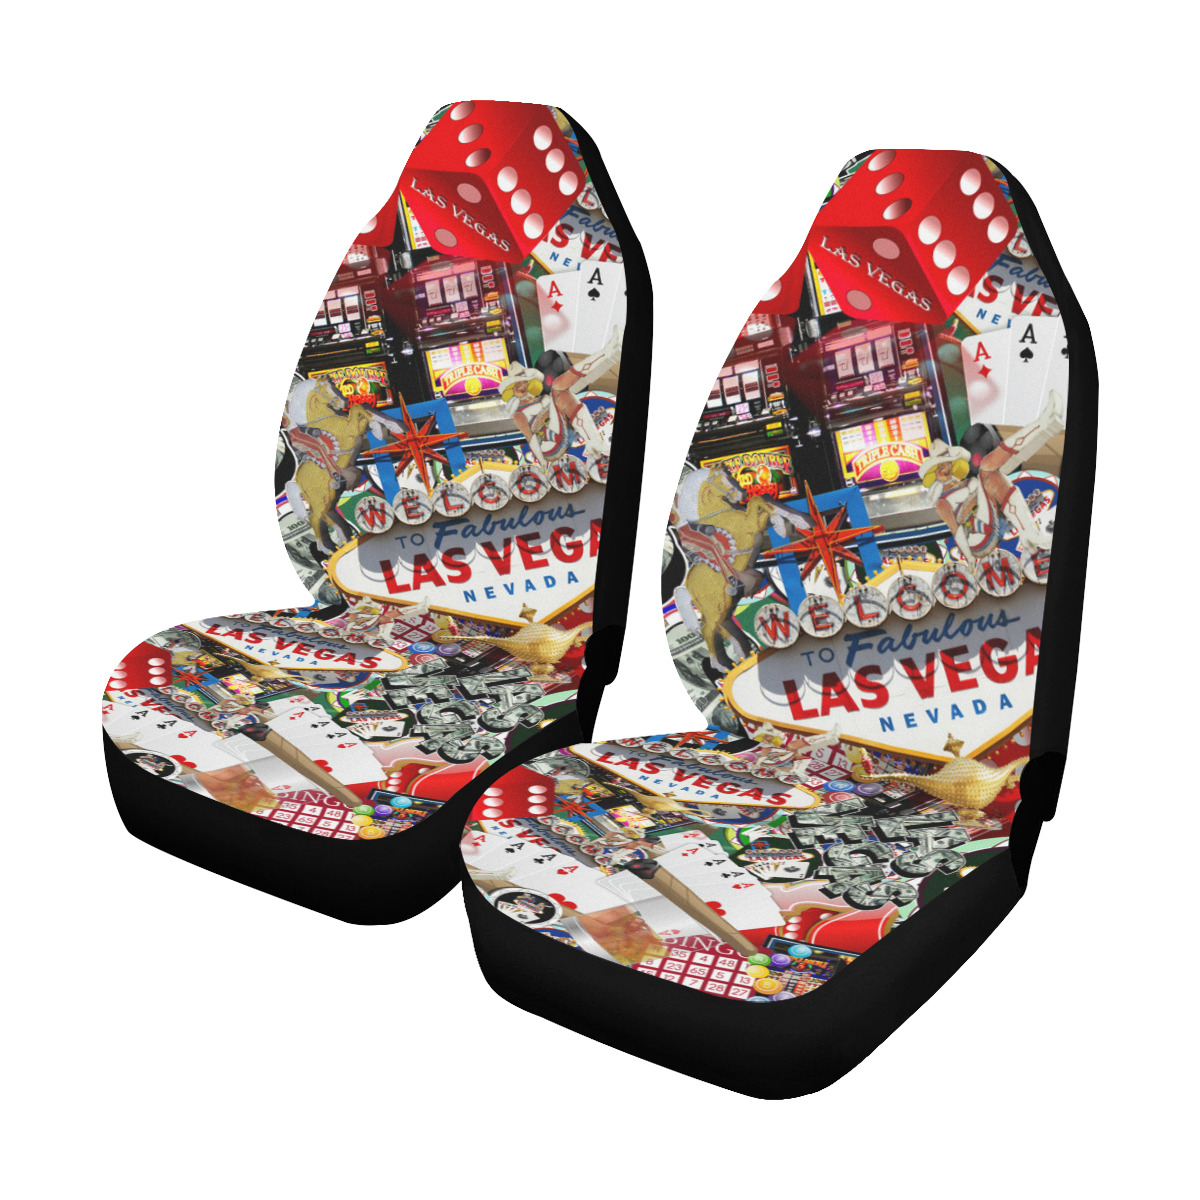 Las Vegas Icons - Gamblers Delight Car Seat Covers (Set of 2)